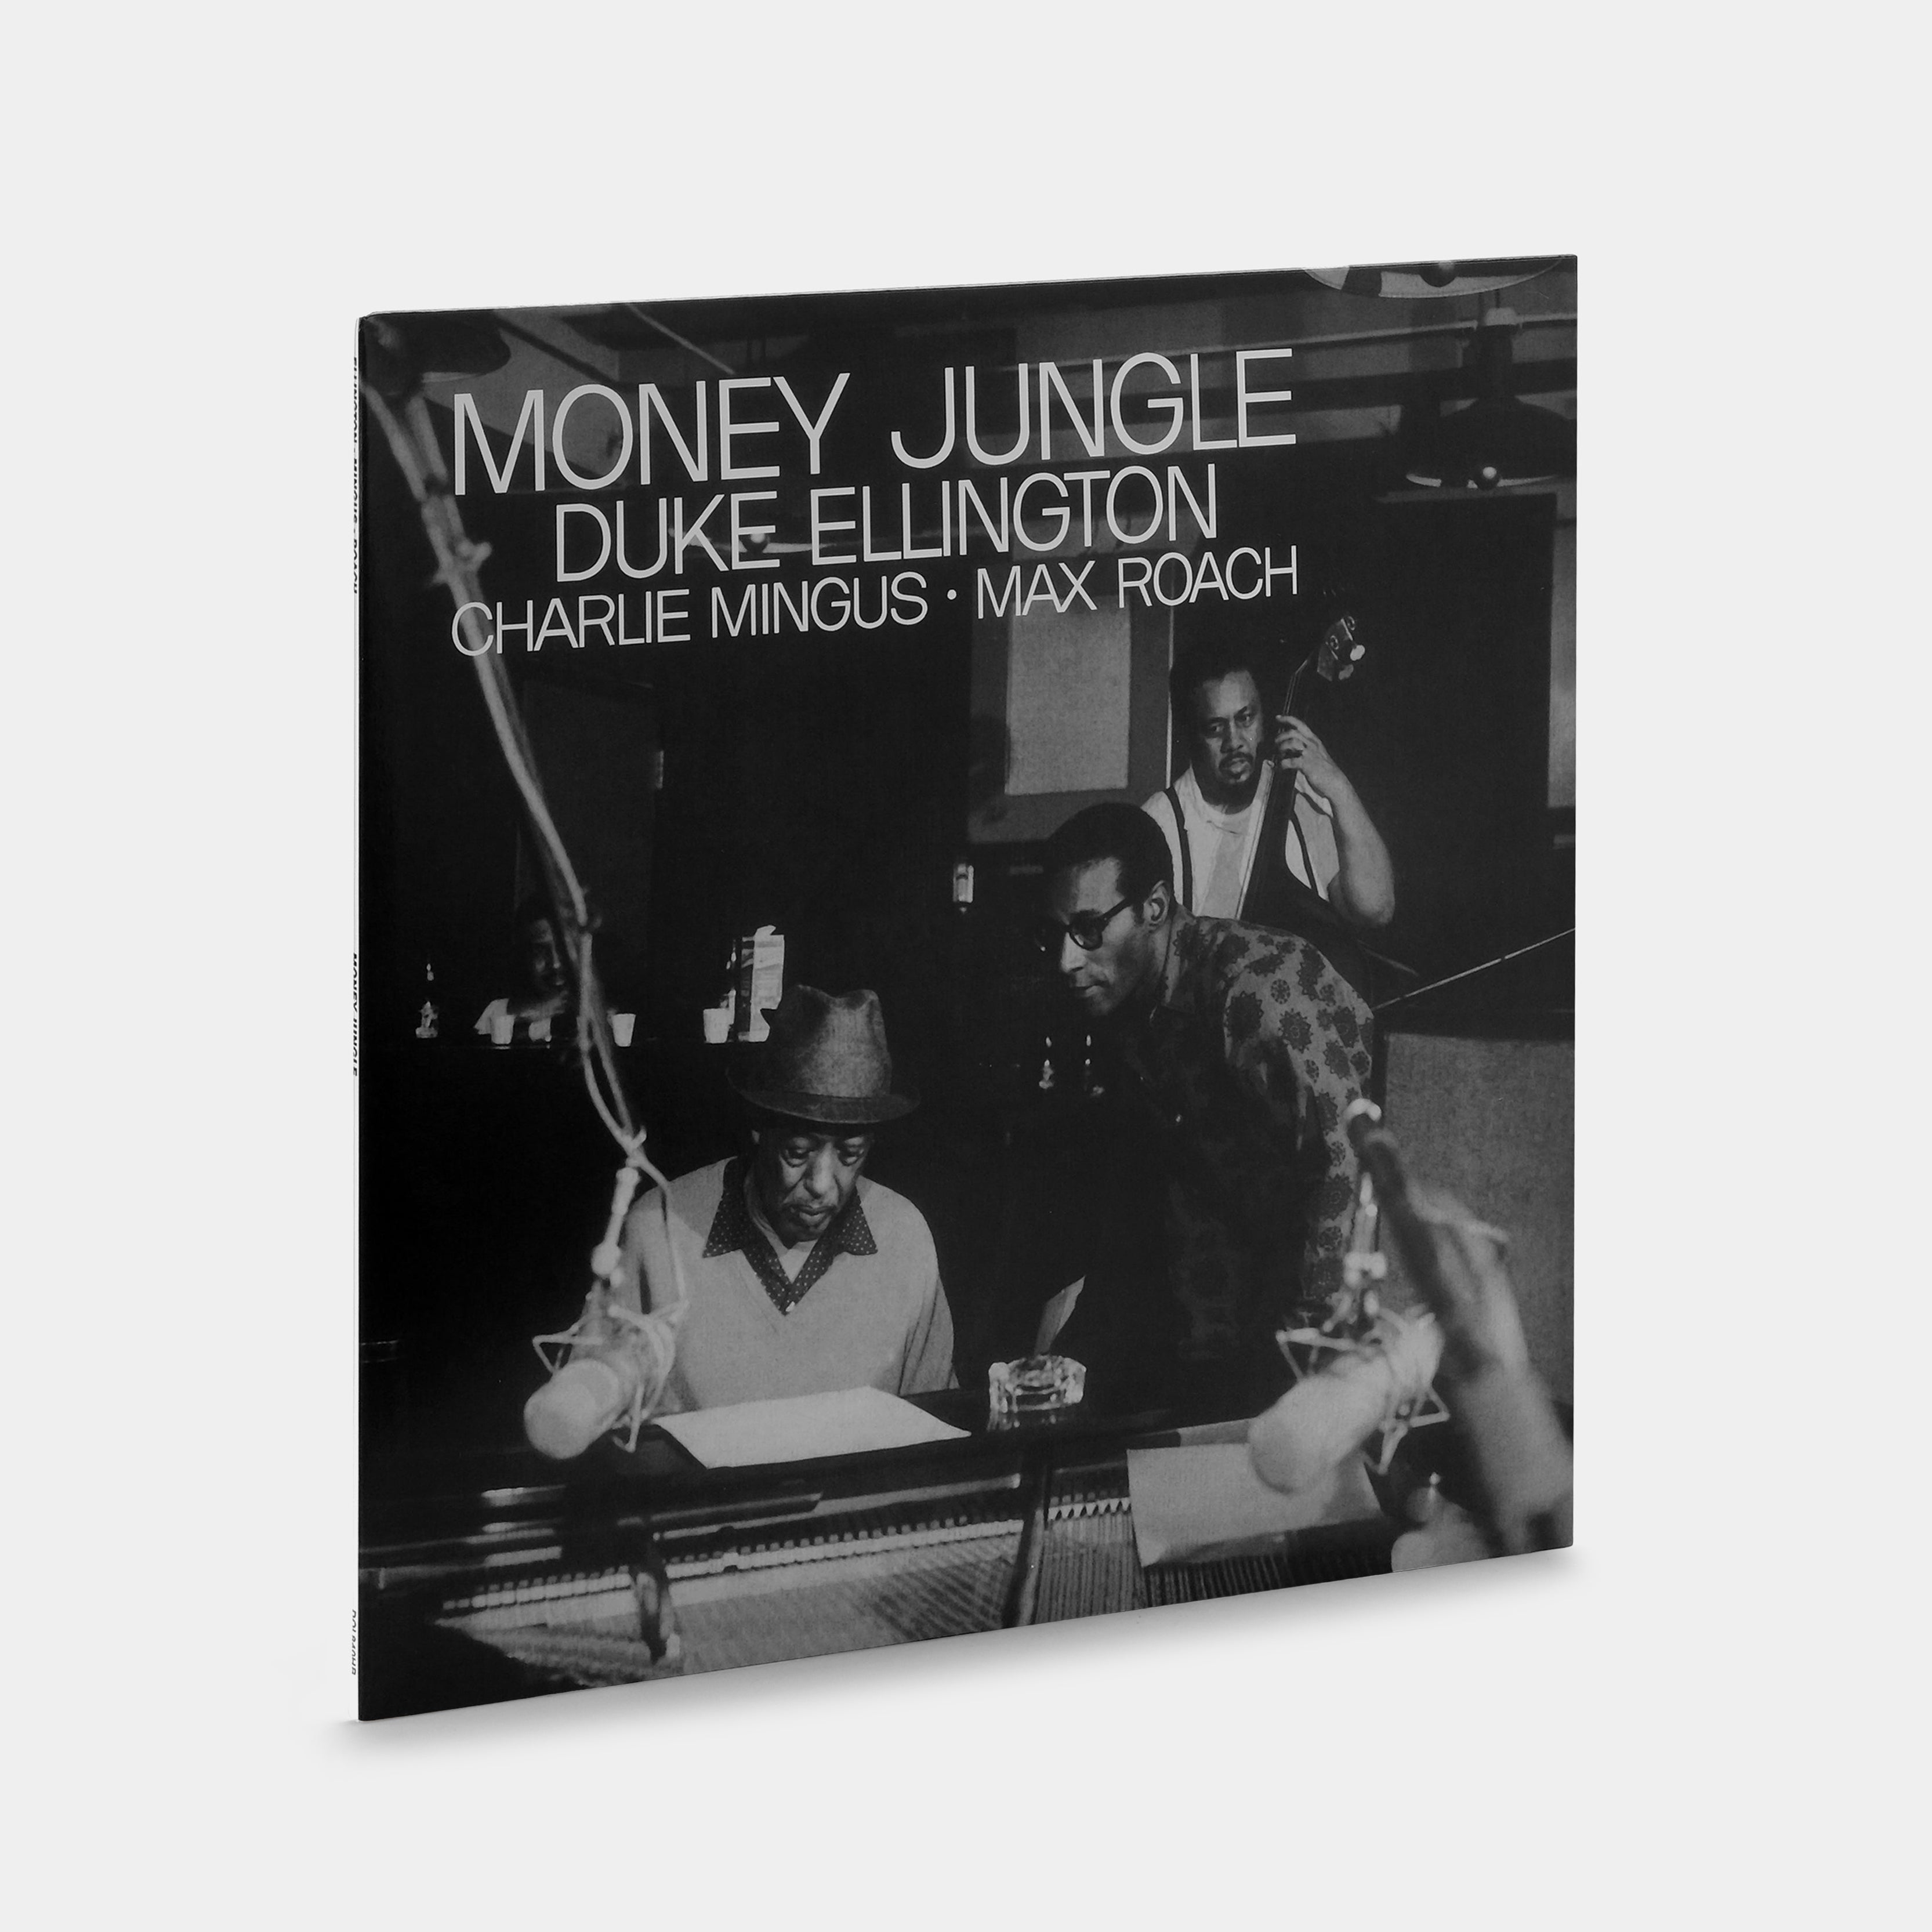 Duke Ellington, Charlie Mingus & Max Roach - Money Jungle LP Vinyl Record